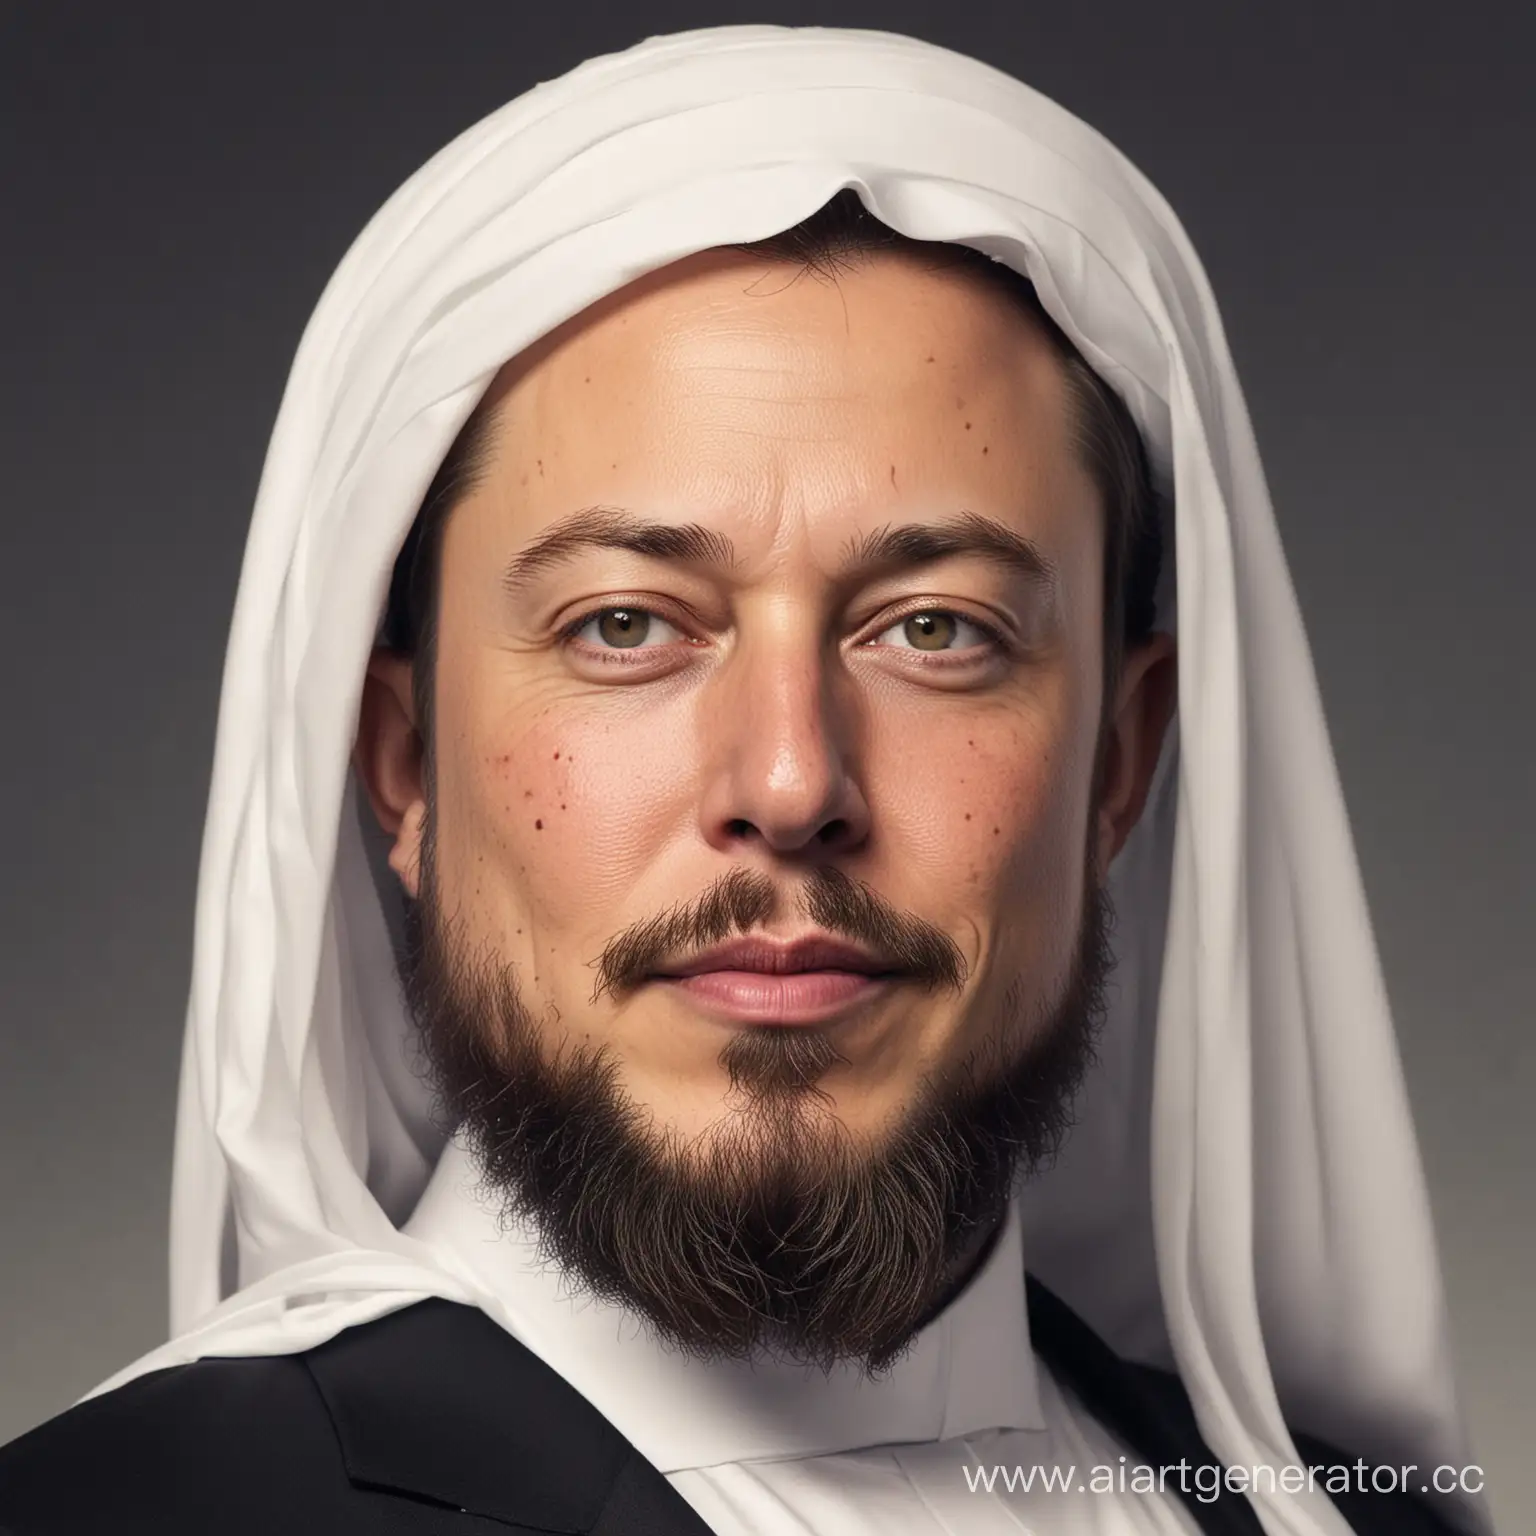 Elon Musk muslim with beard